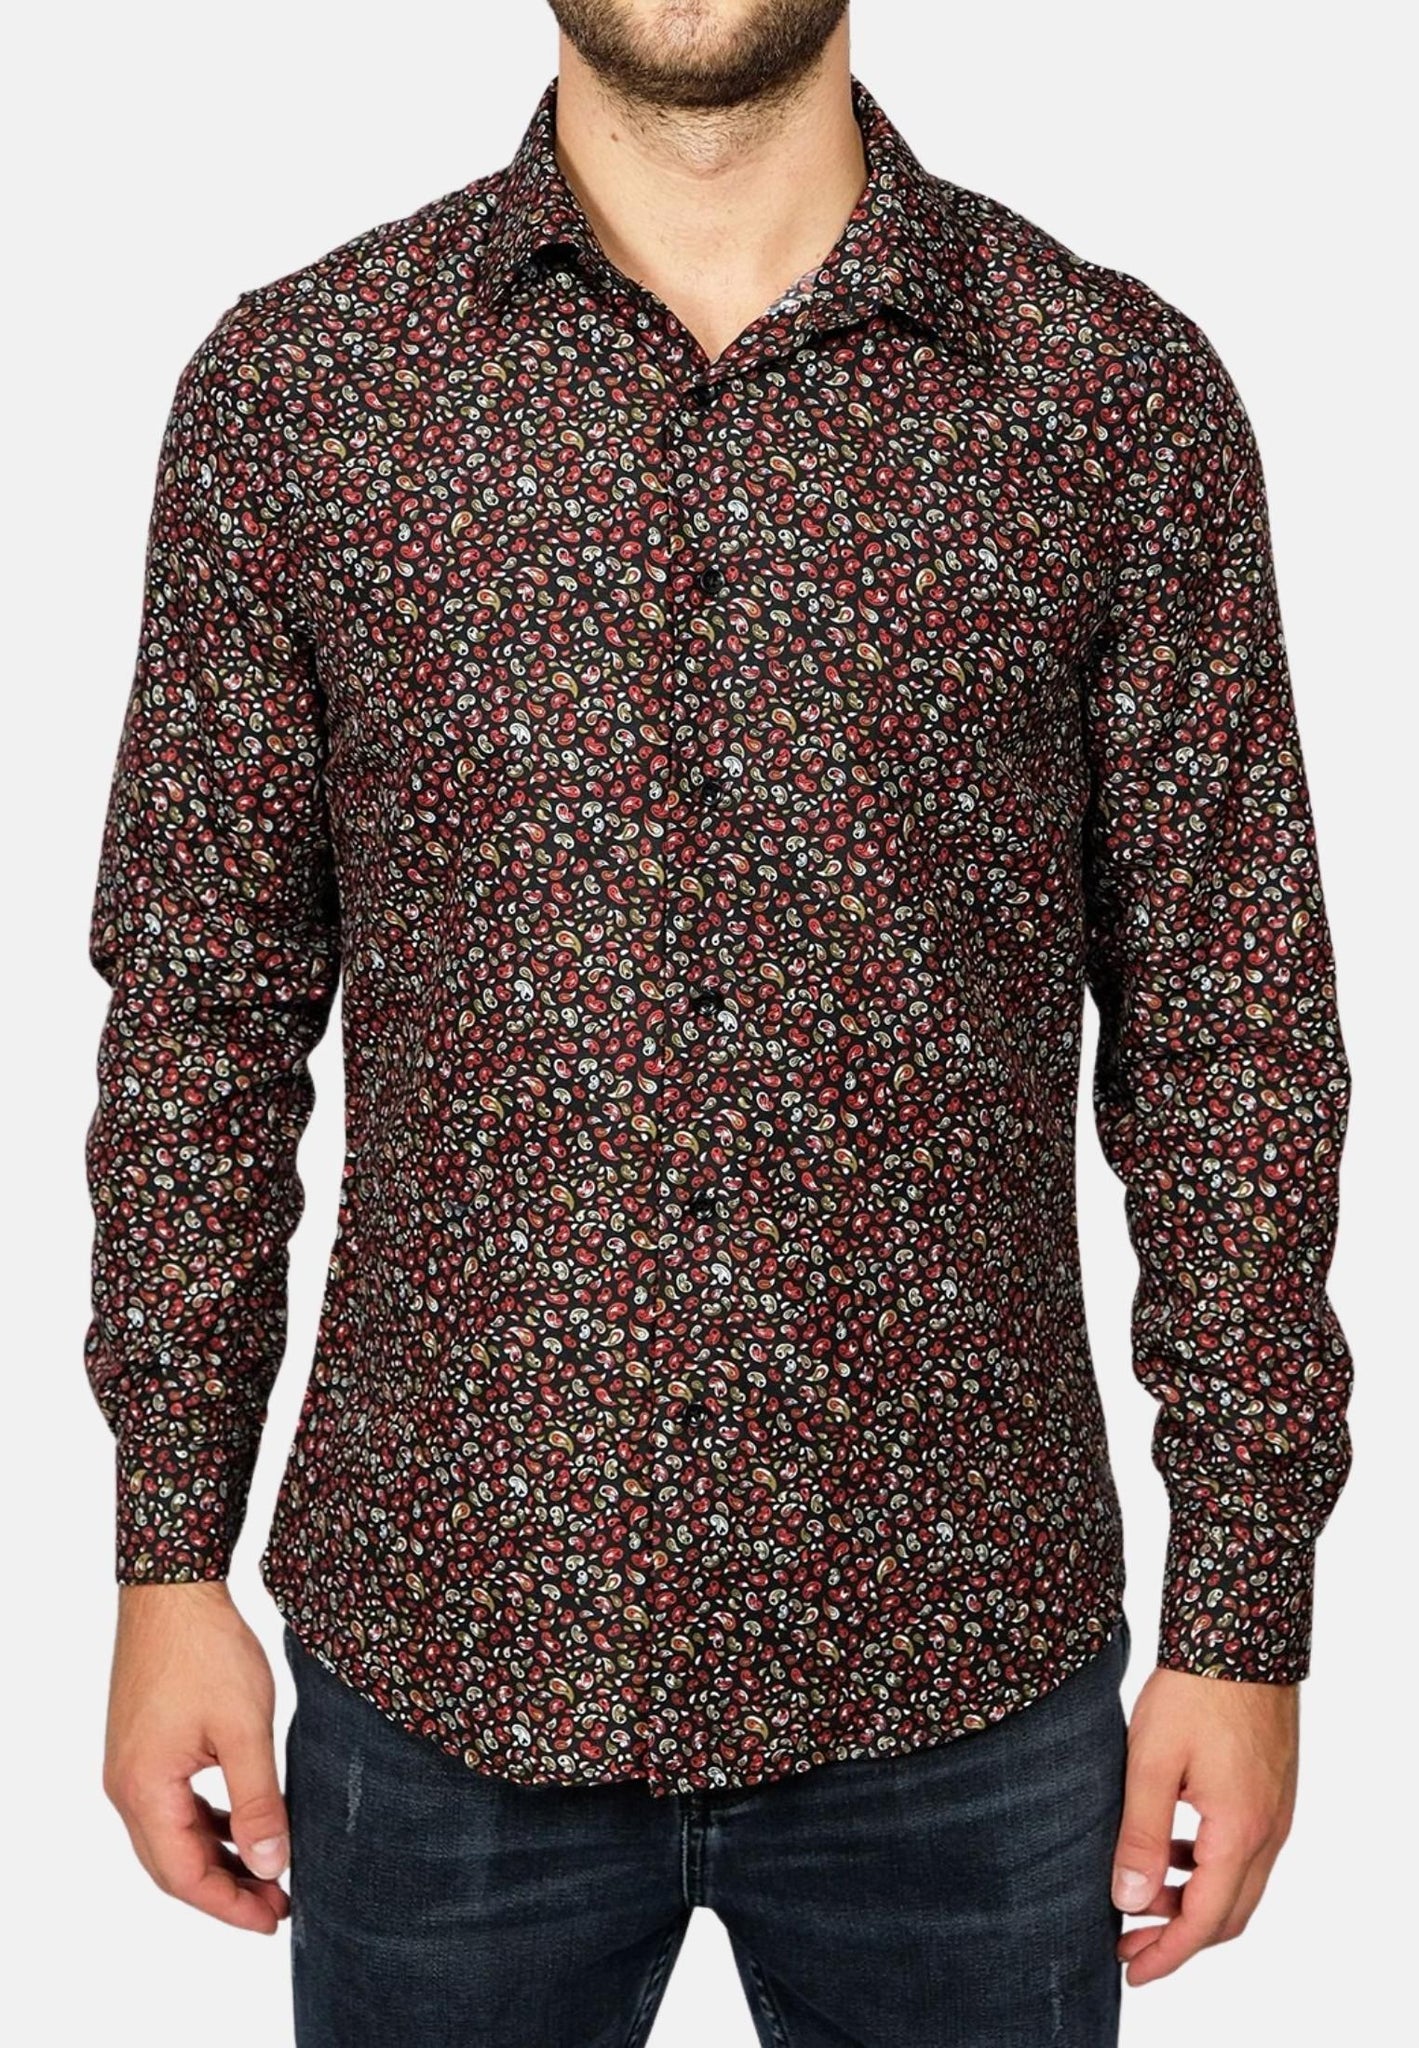 Paisley patterned shirt